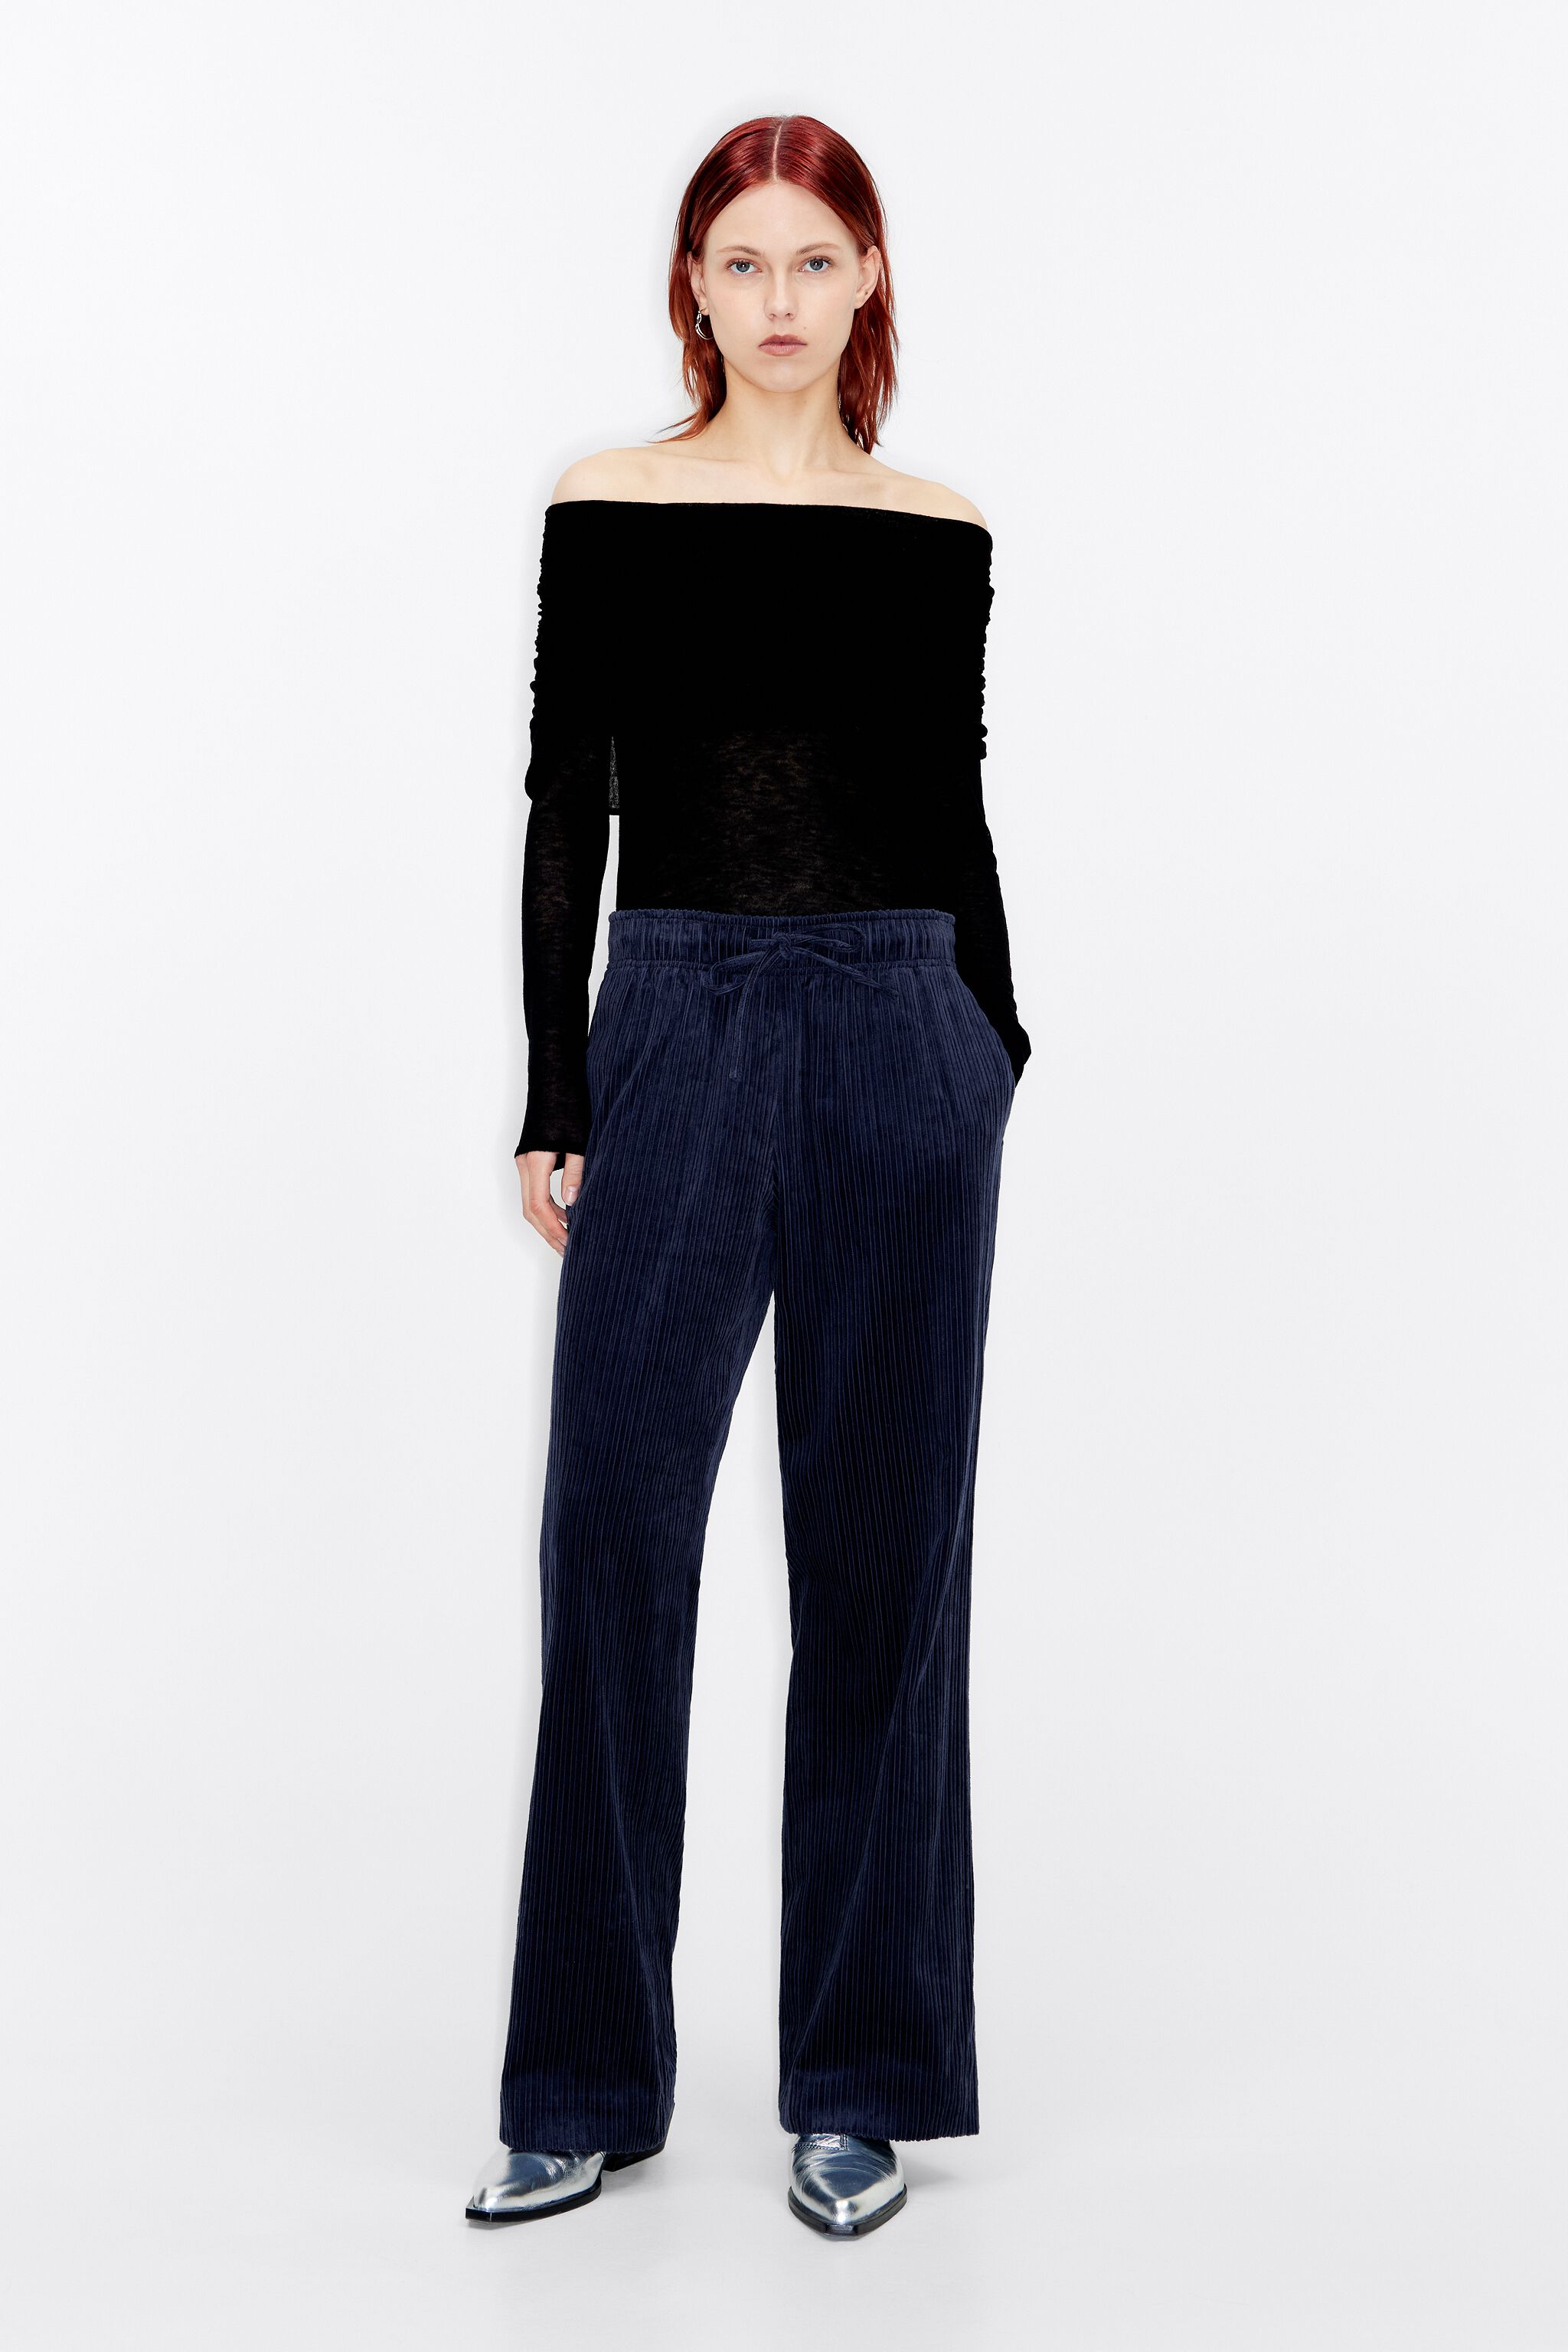 Liquid velvet high-waisted trousers with an oval leg | EMPORIO ARMANI Woman